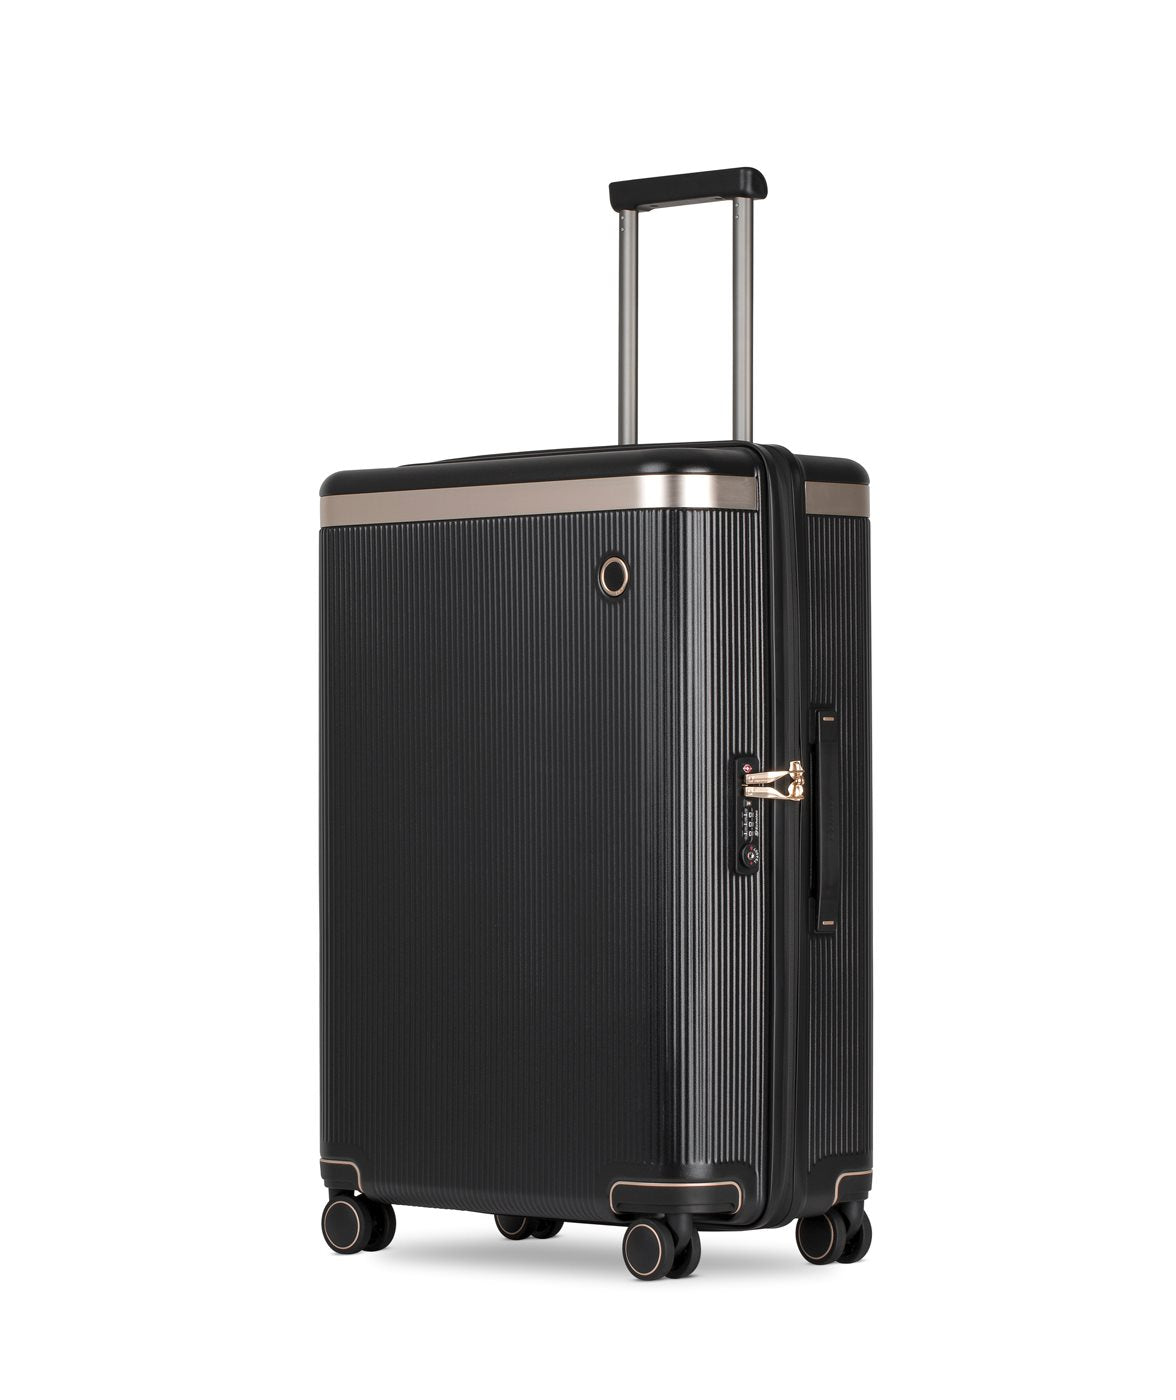 Echolac Dynasty 4-wheel luggage - M - Black Ebony Ruimbagage Koffer - Reisartikelen-nl